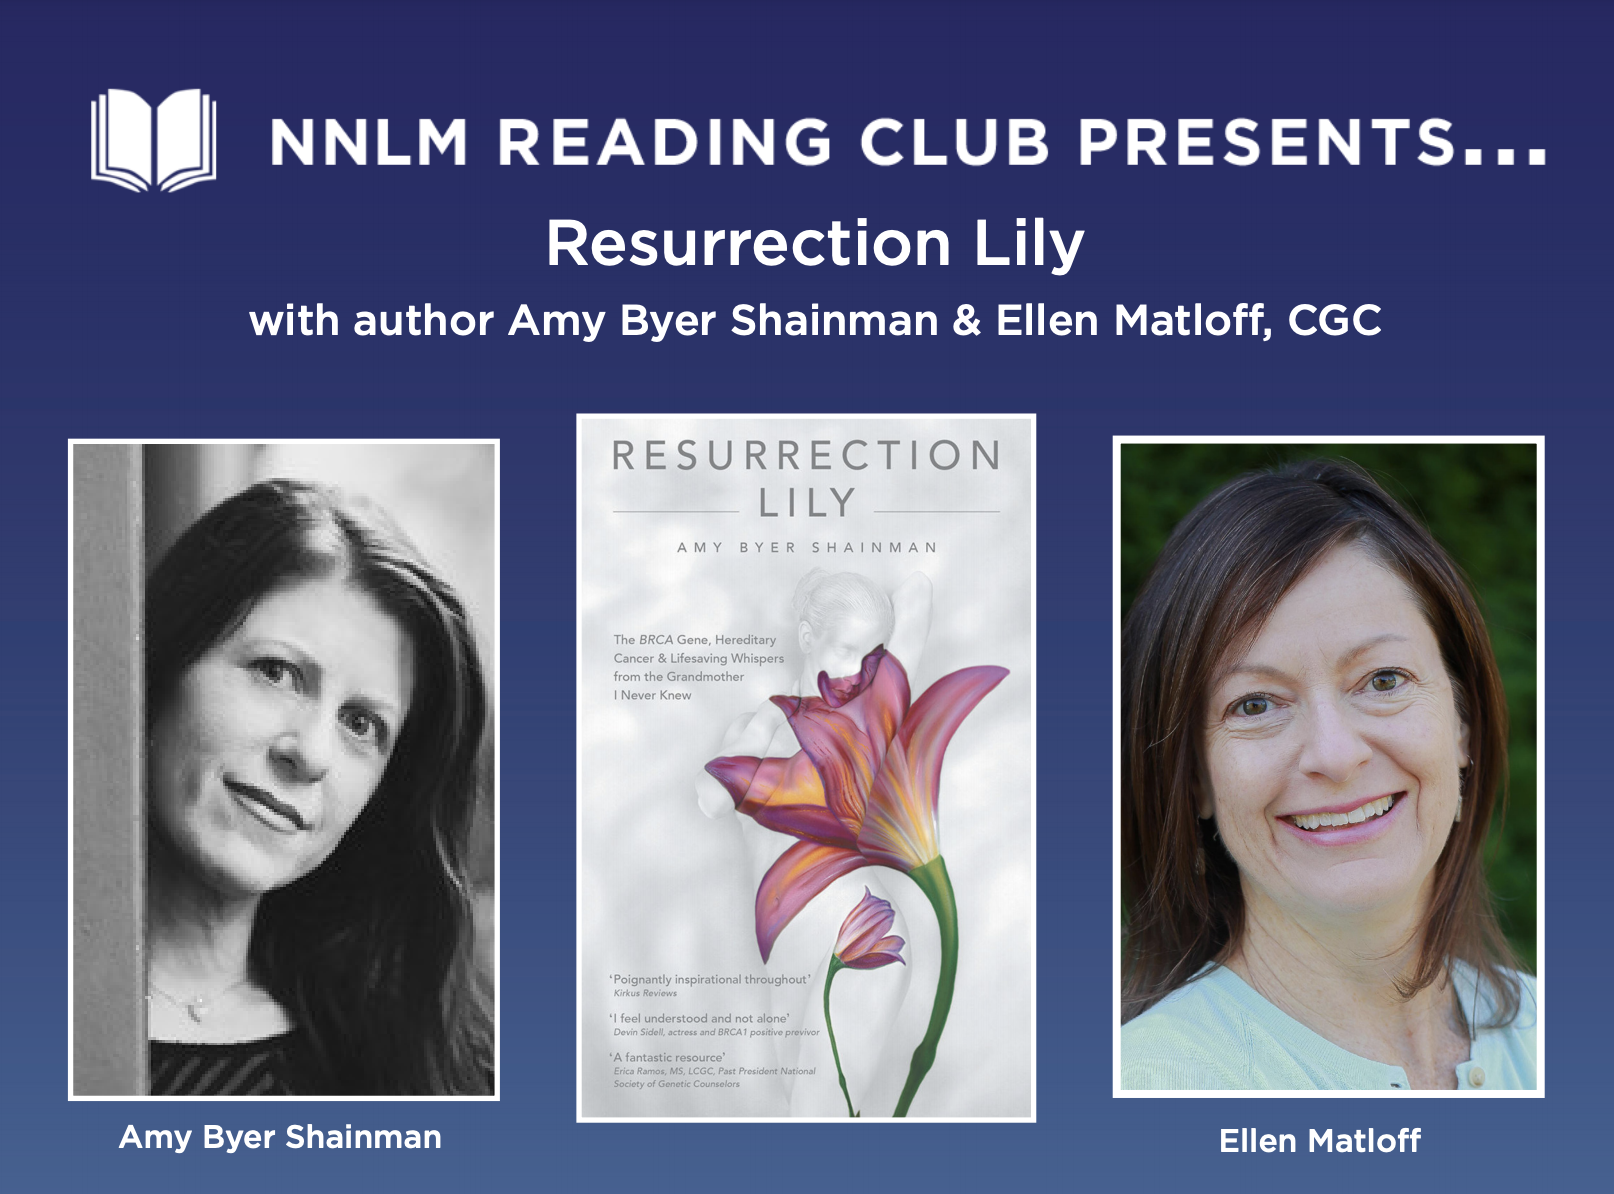 NNLM Reading Club Presents... Resurrection Lily